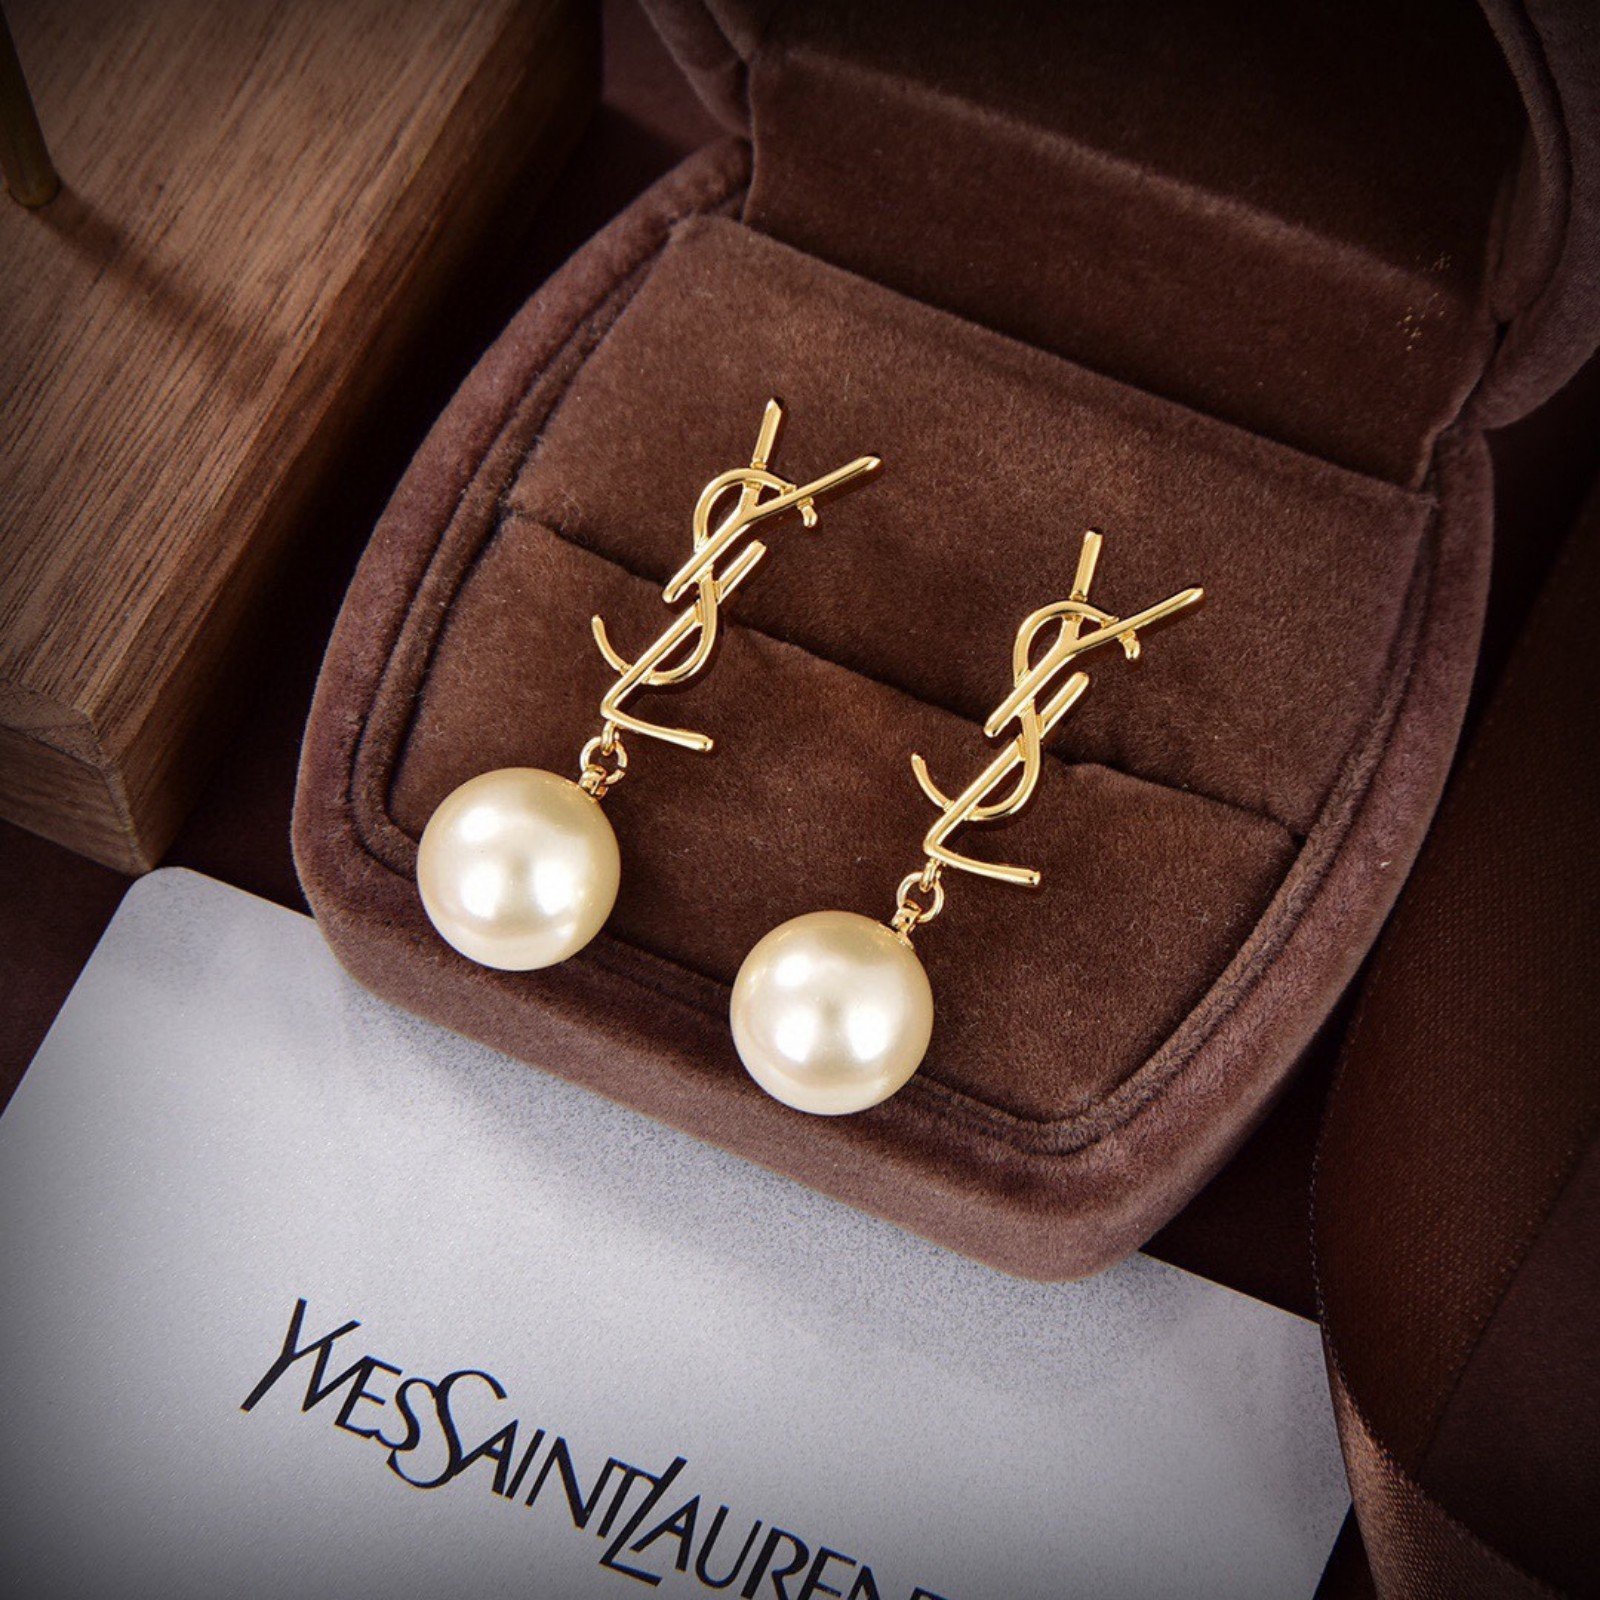 pearl earrings e2crfNp7m